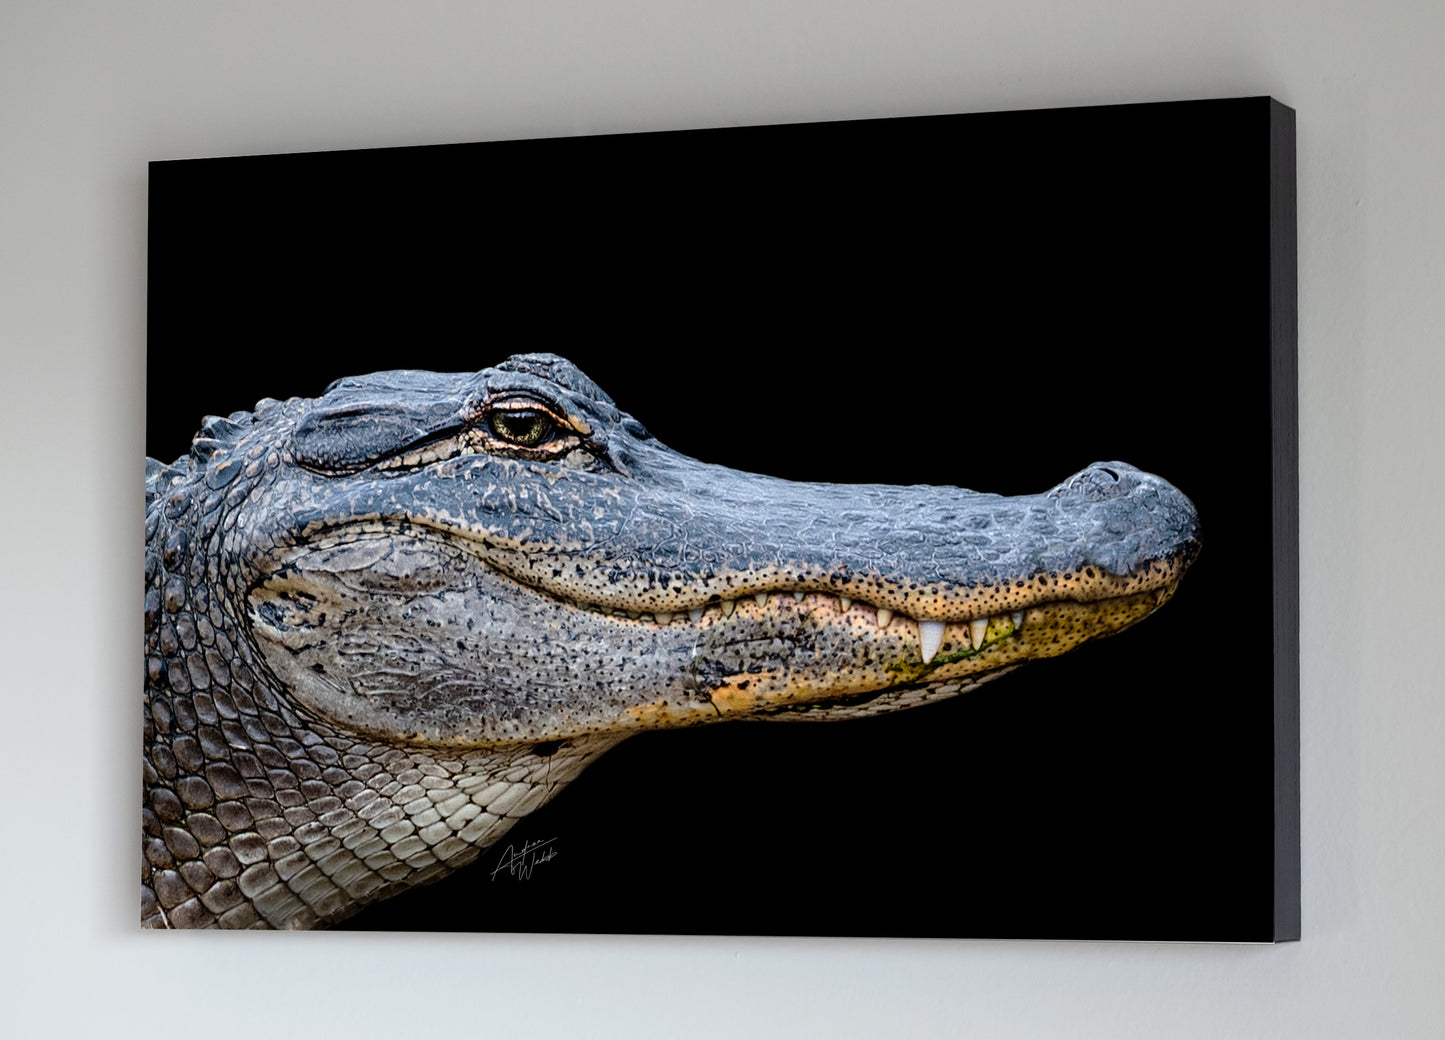 American Alligator Art, American Alligator on Black Background Portrait, Minimalist Alligator Wall Art, Alligator Artwork. Alligator gifts. Animal Photography. Lowcountry art. Lowcountry decor. Alligator decor.